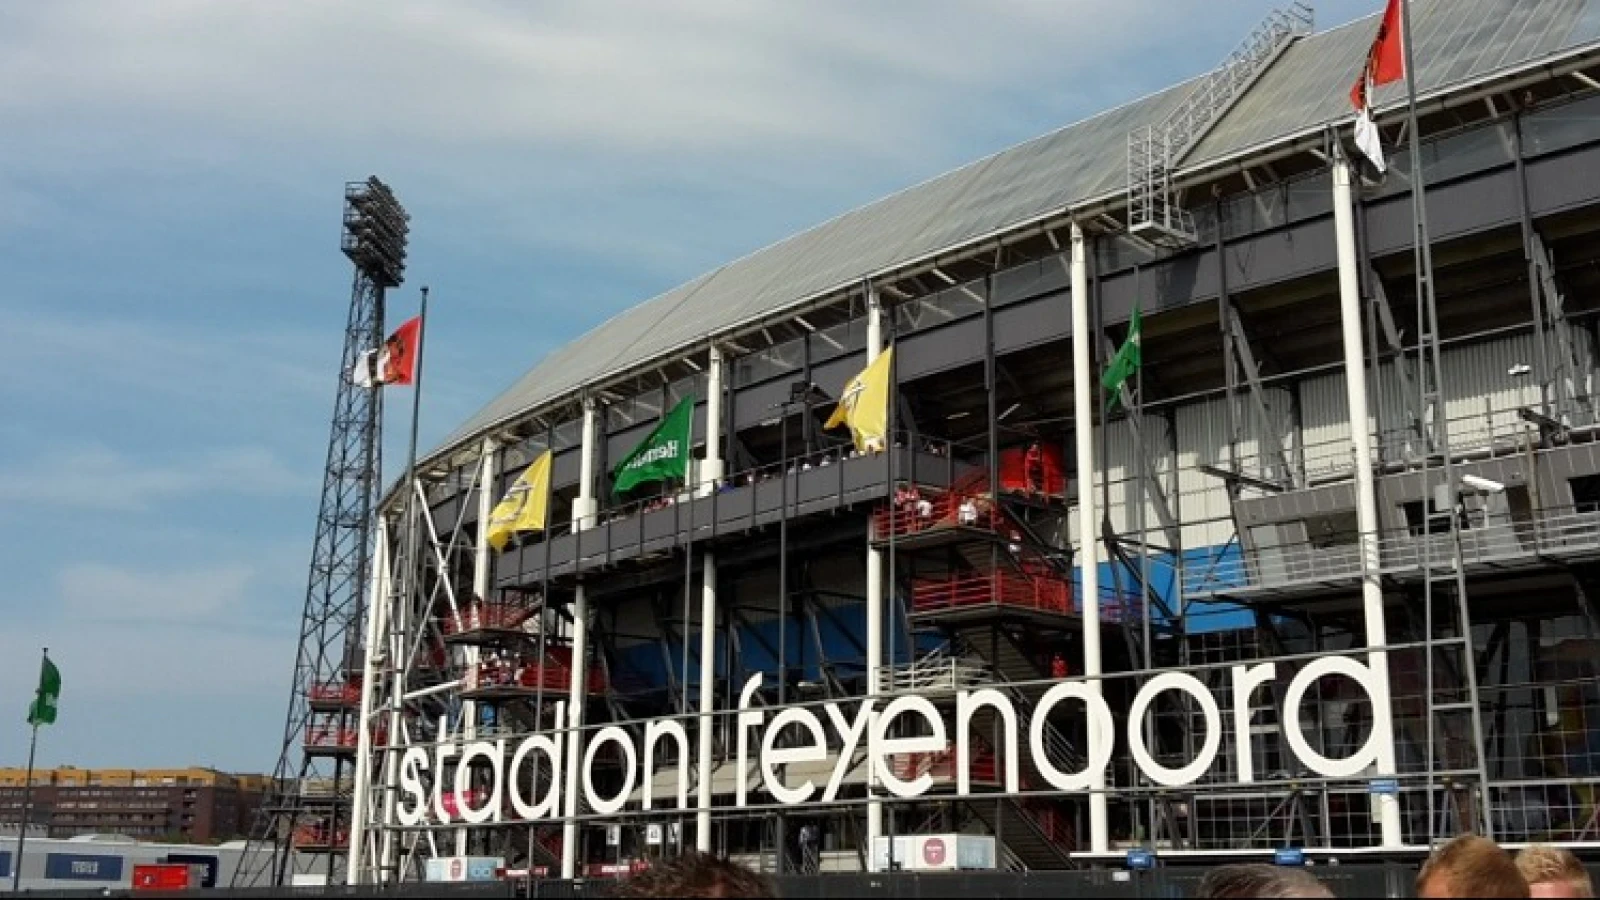 Tuchtcommissie van de KNVB verlaagt straf voor Feyenoord